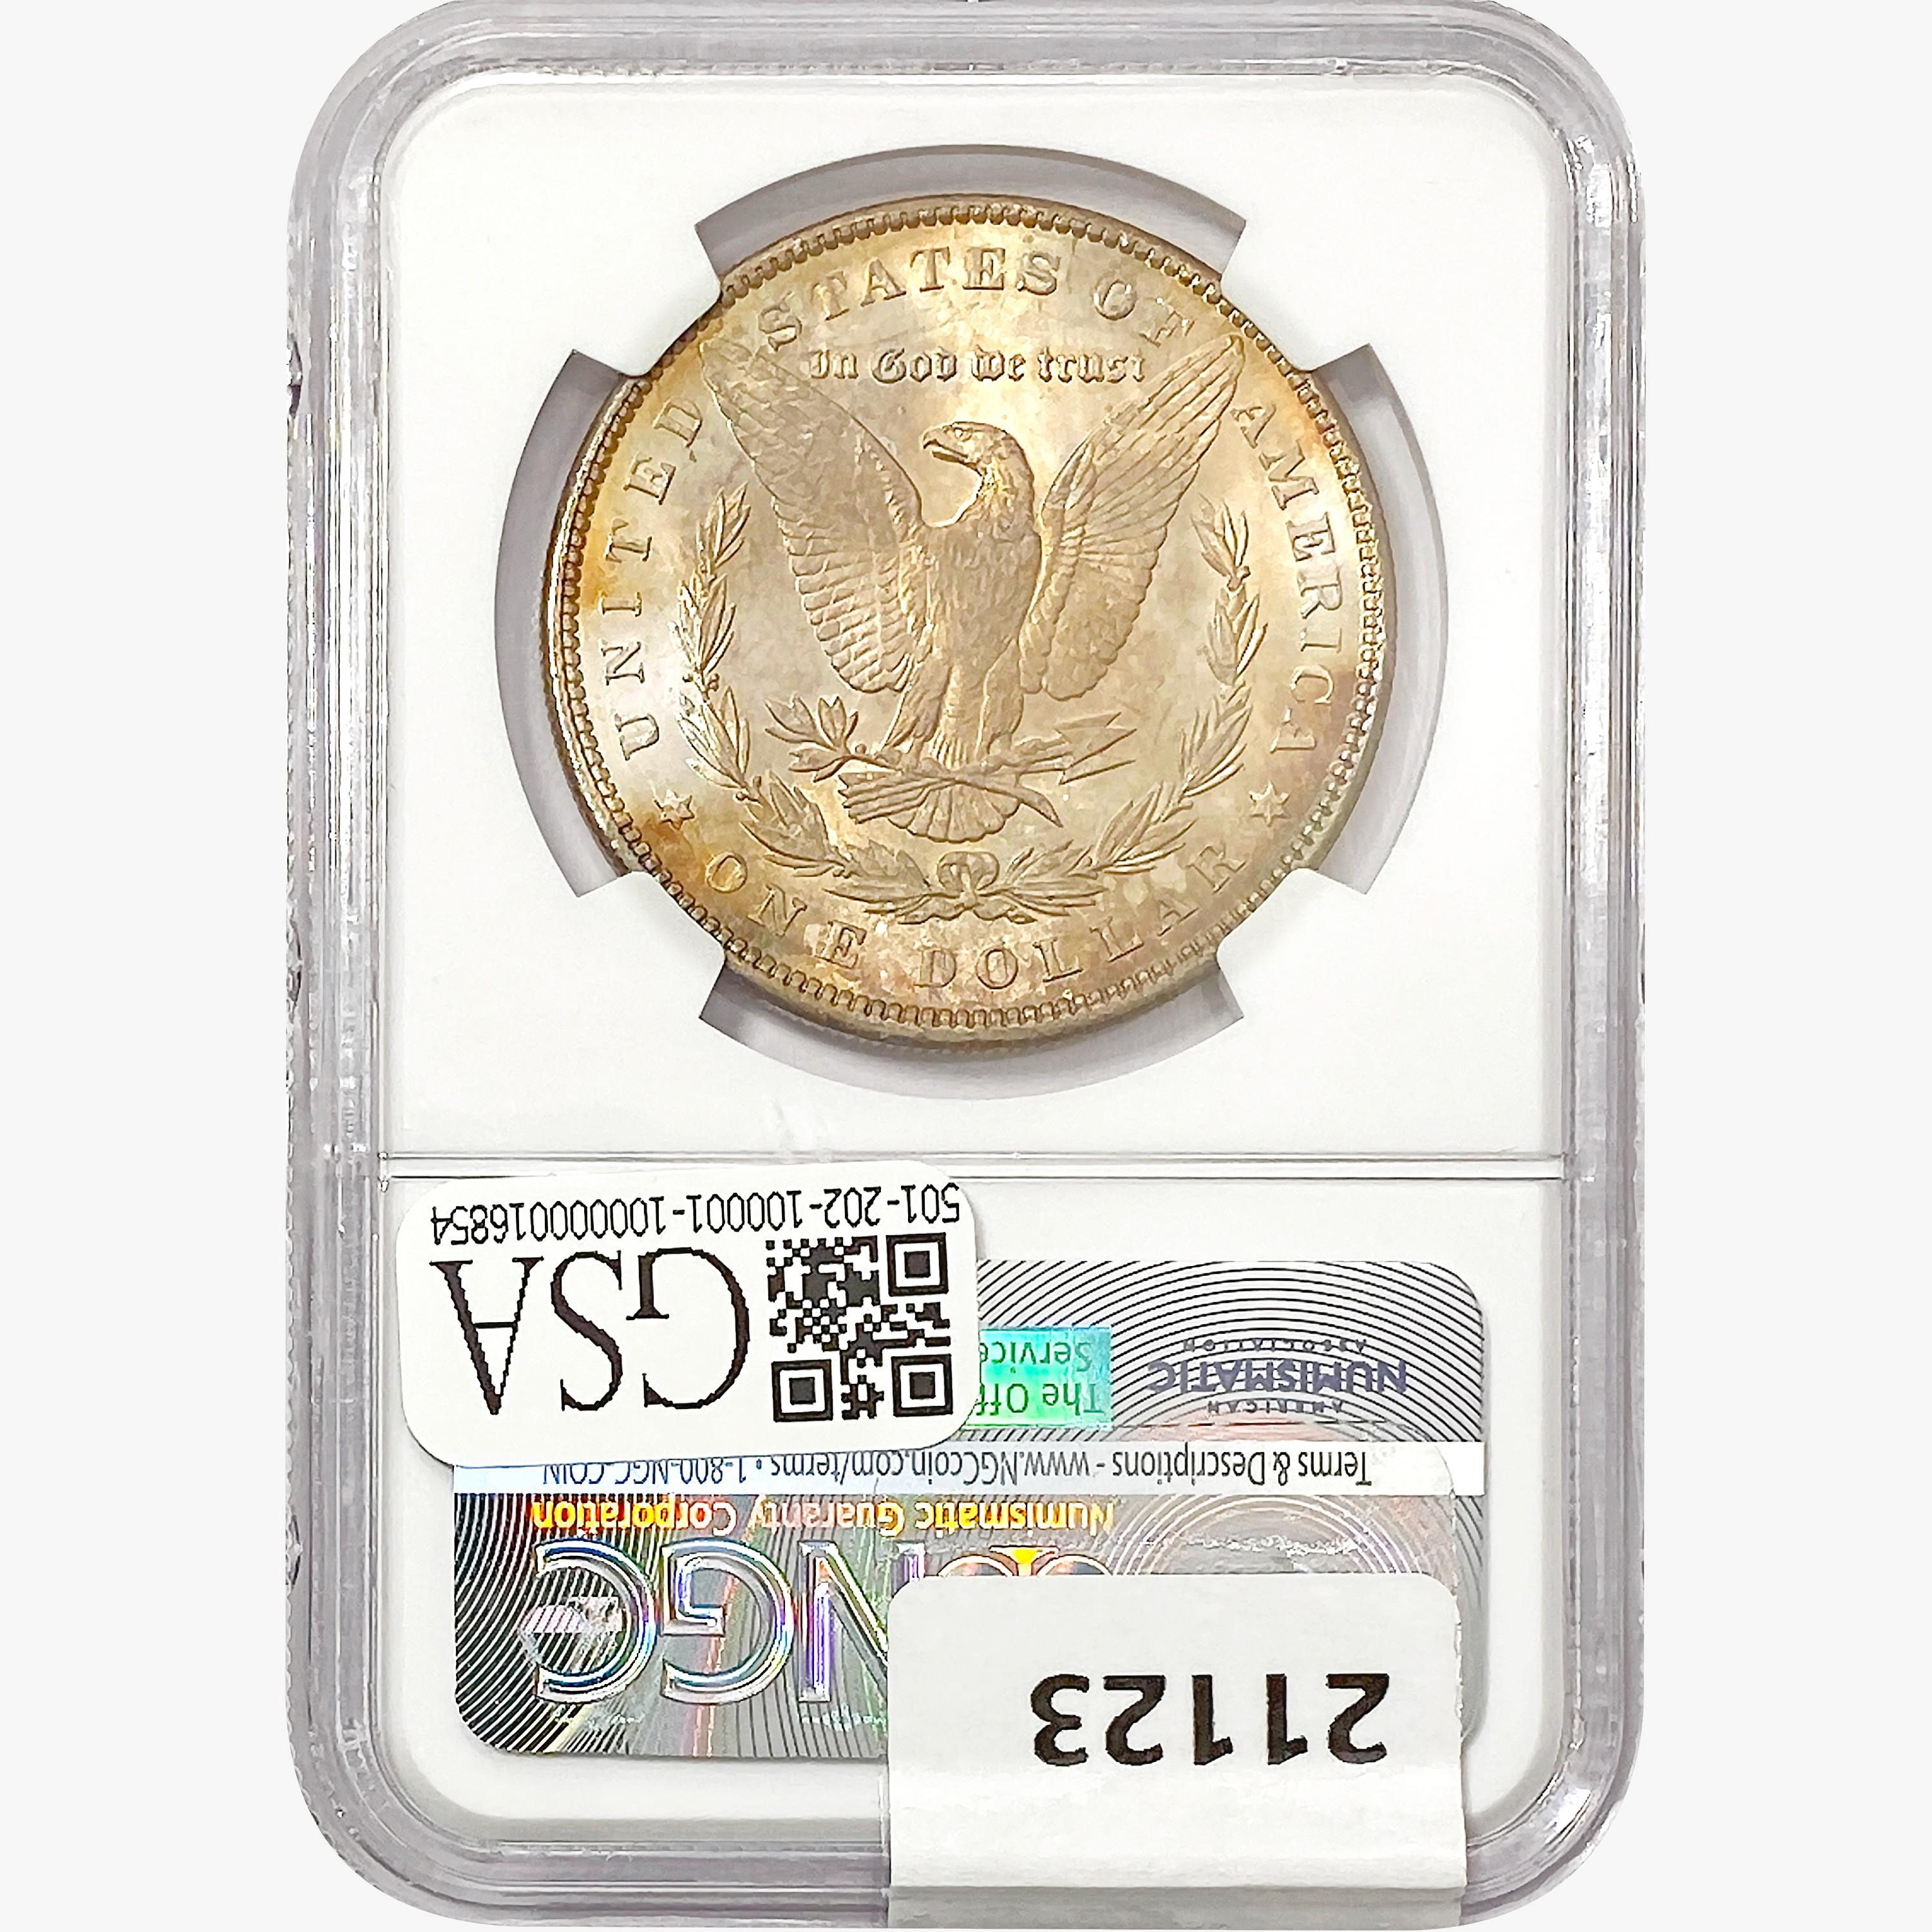 1897 Morgan Silver Dollar NGC MS63